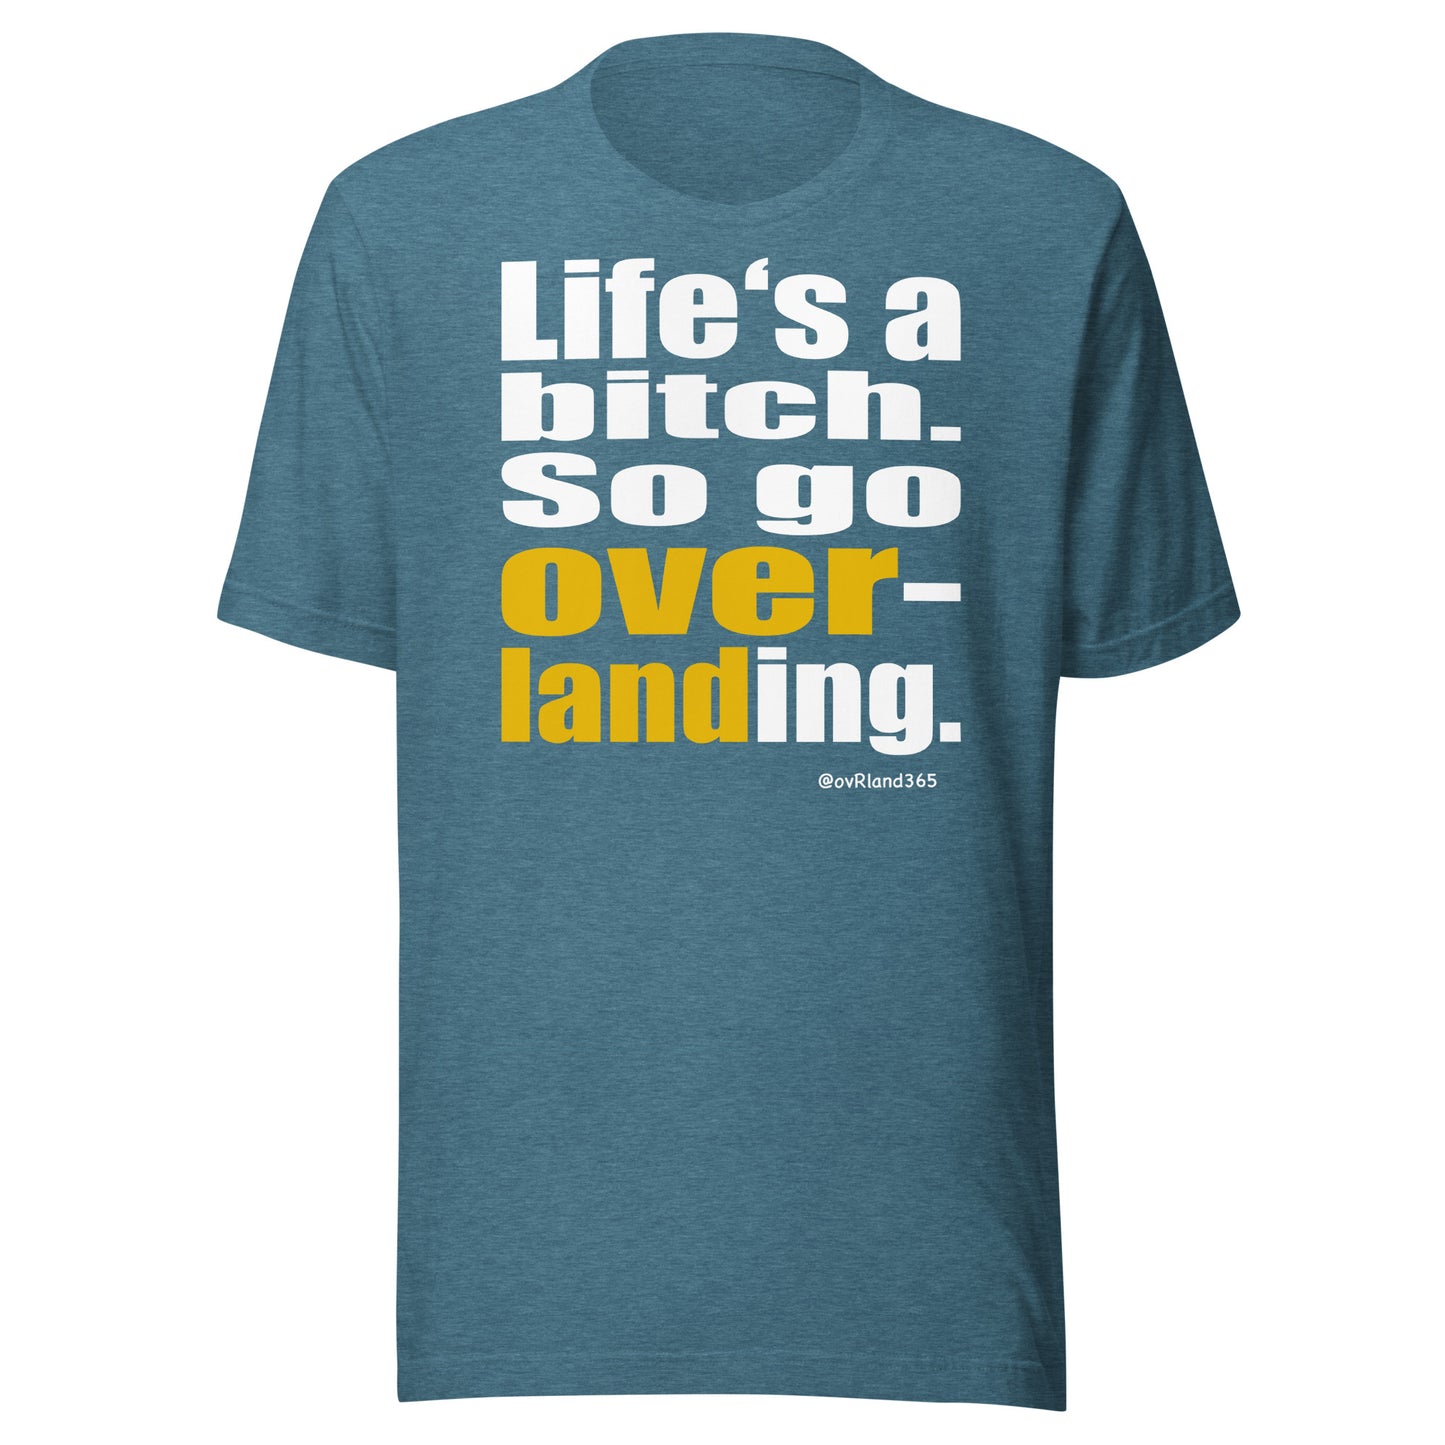 "Life's a bitch. So go overlanding." Teal t-shirt. overland365.com